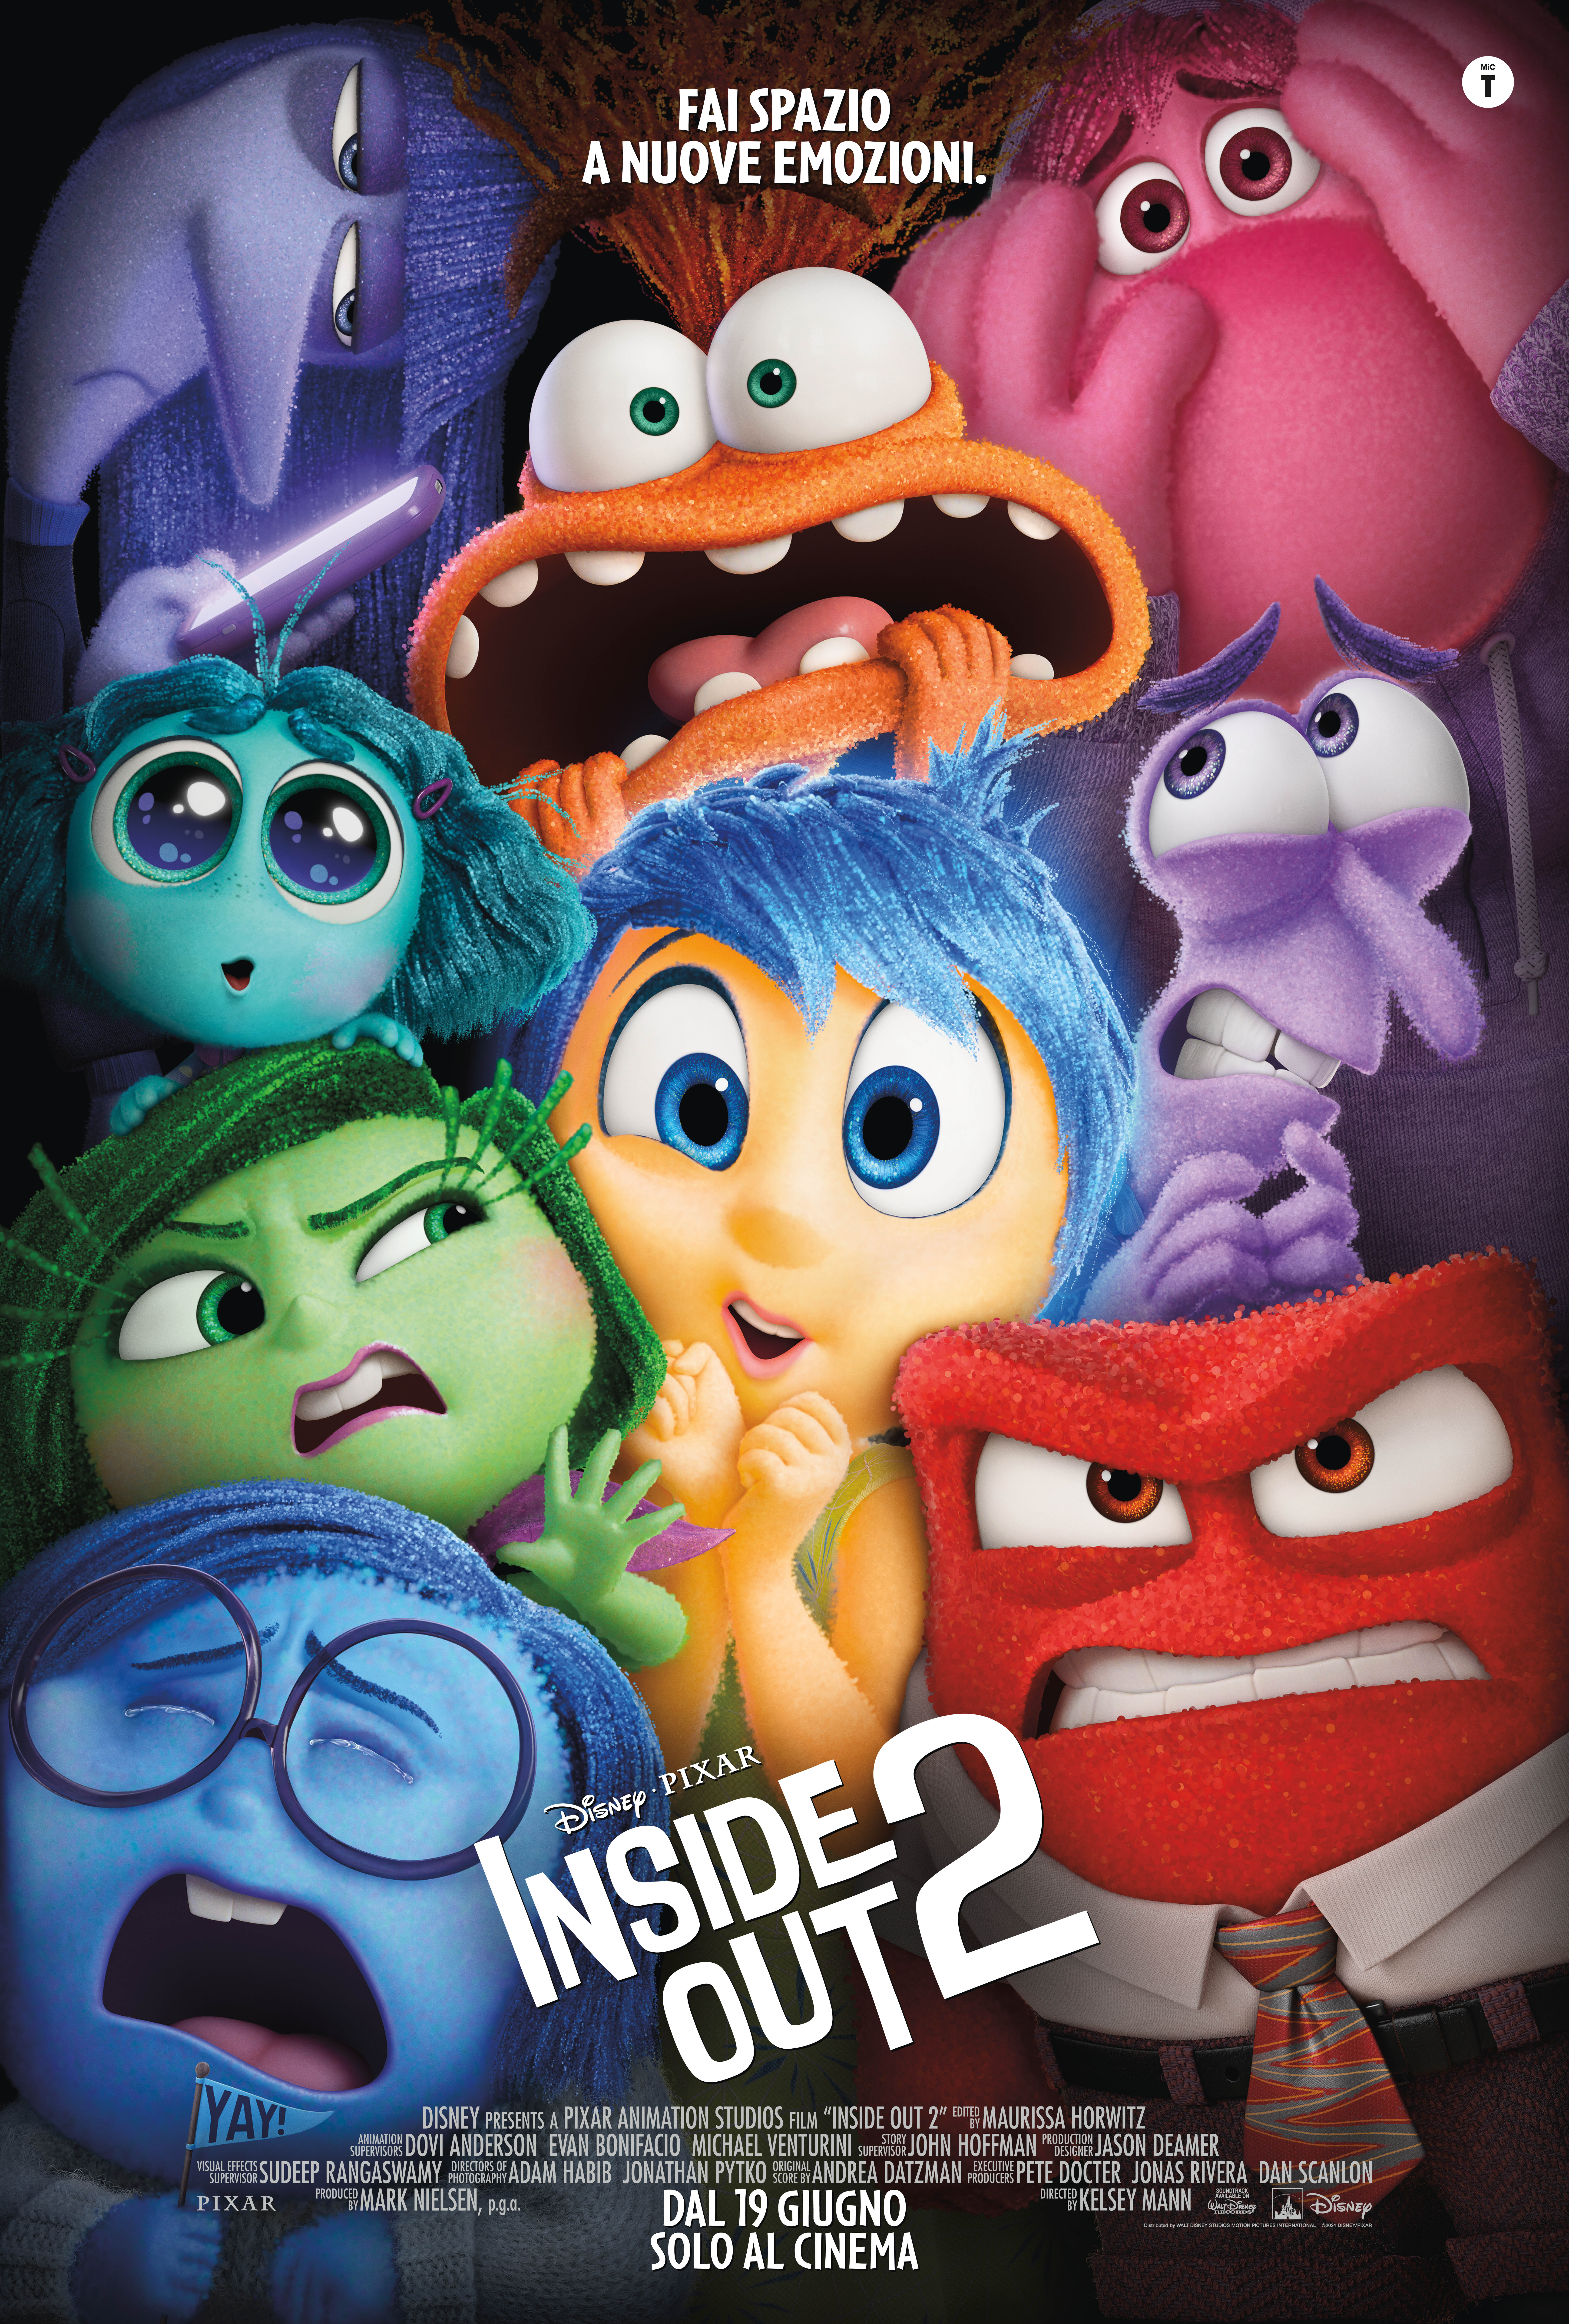 il nuovo poster di inside out 2 - nerdface